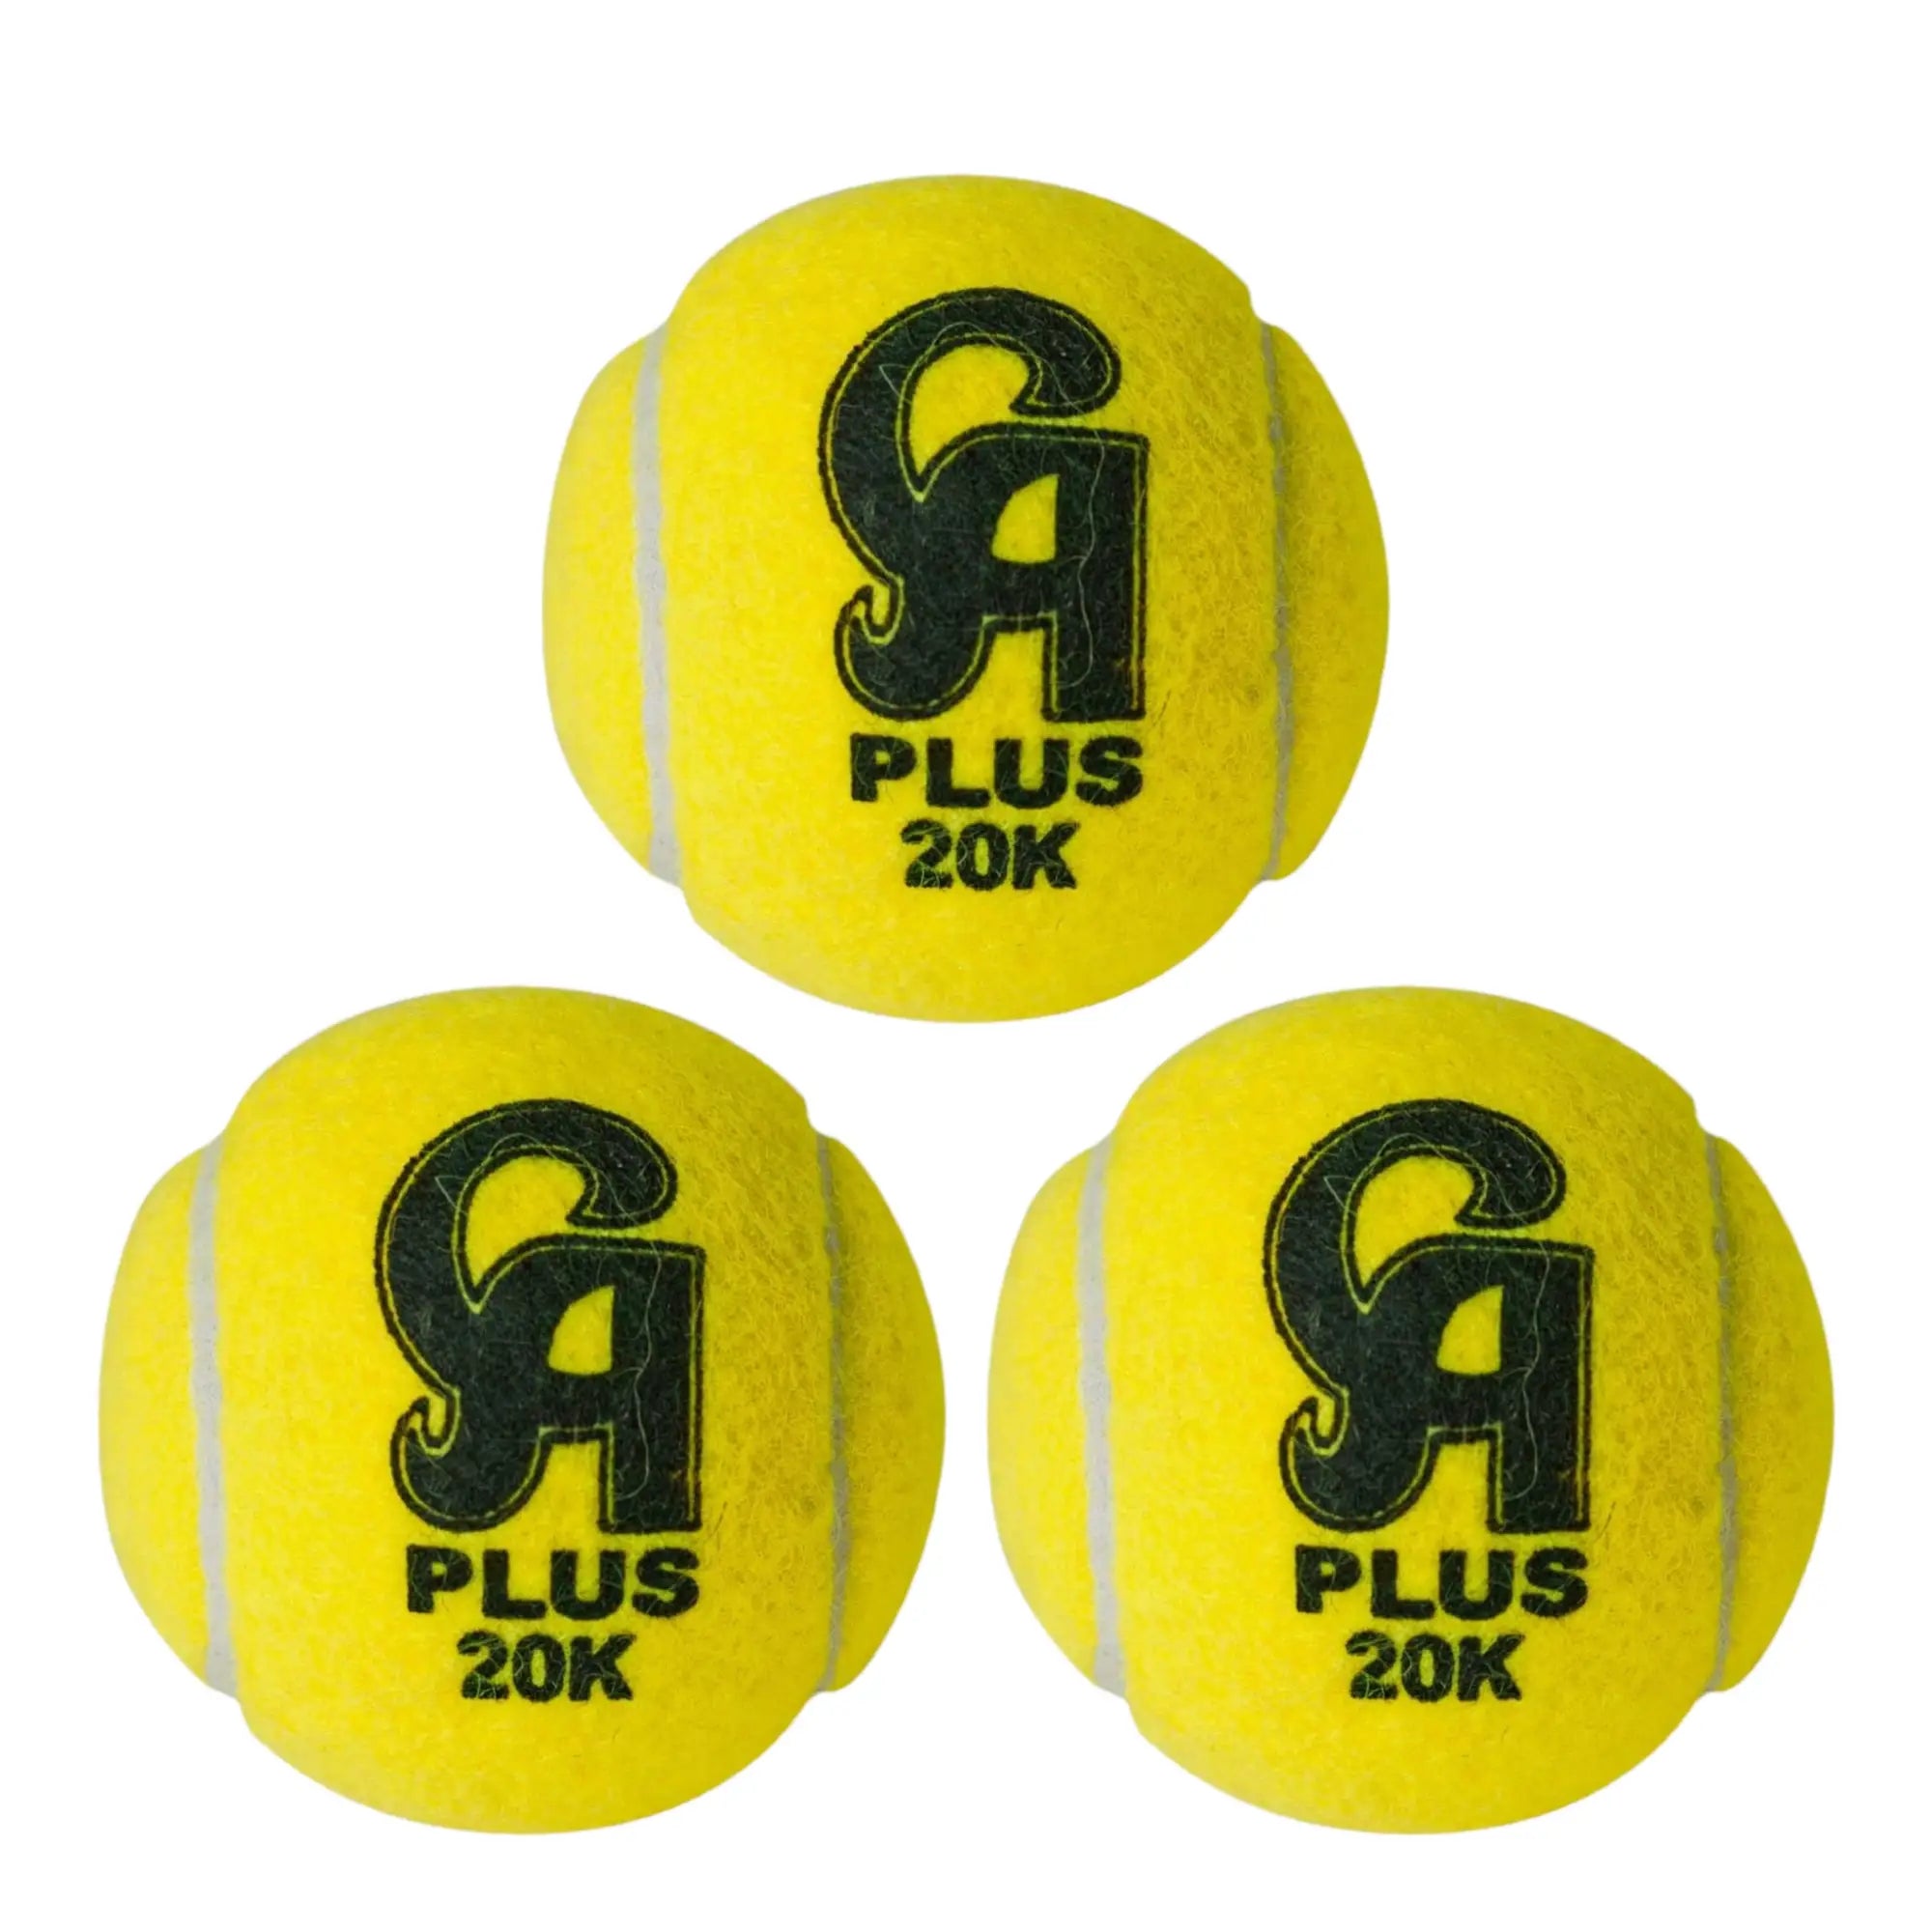 CA Plus 20K Cricket Tennis Ball Tape Ball (Pack of 3) - BALL - SOFTBALL